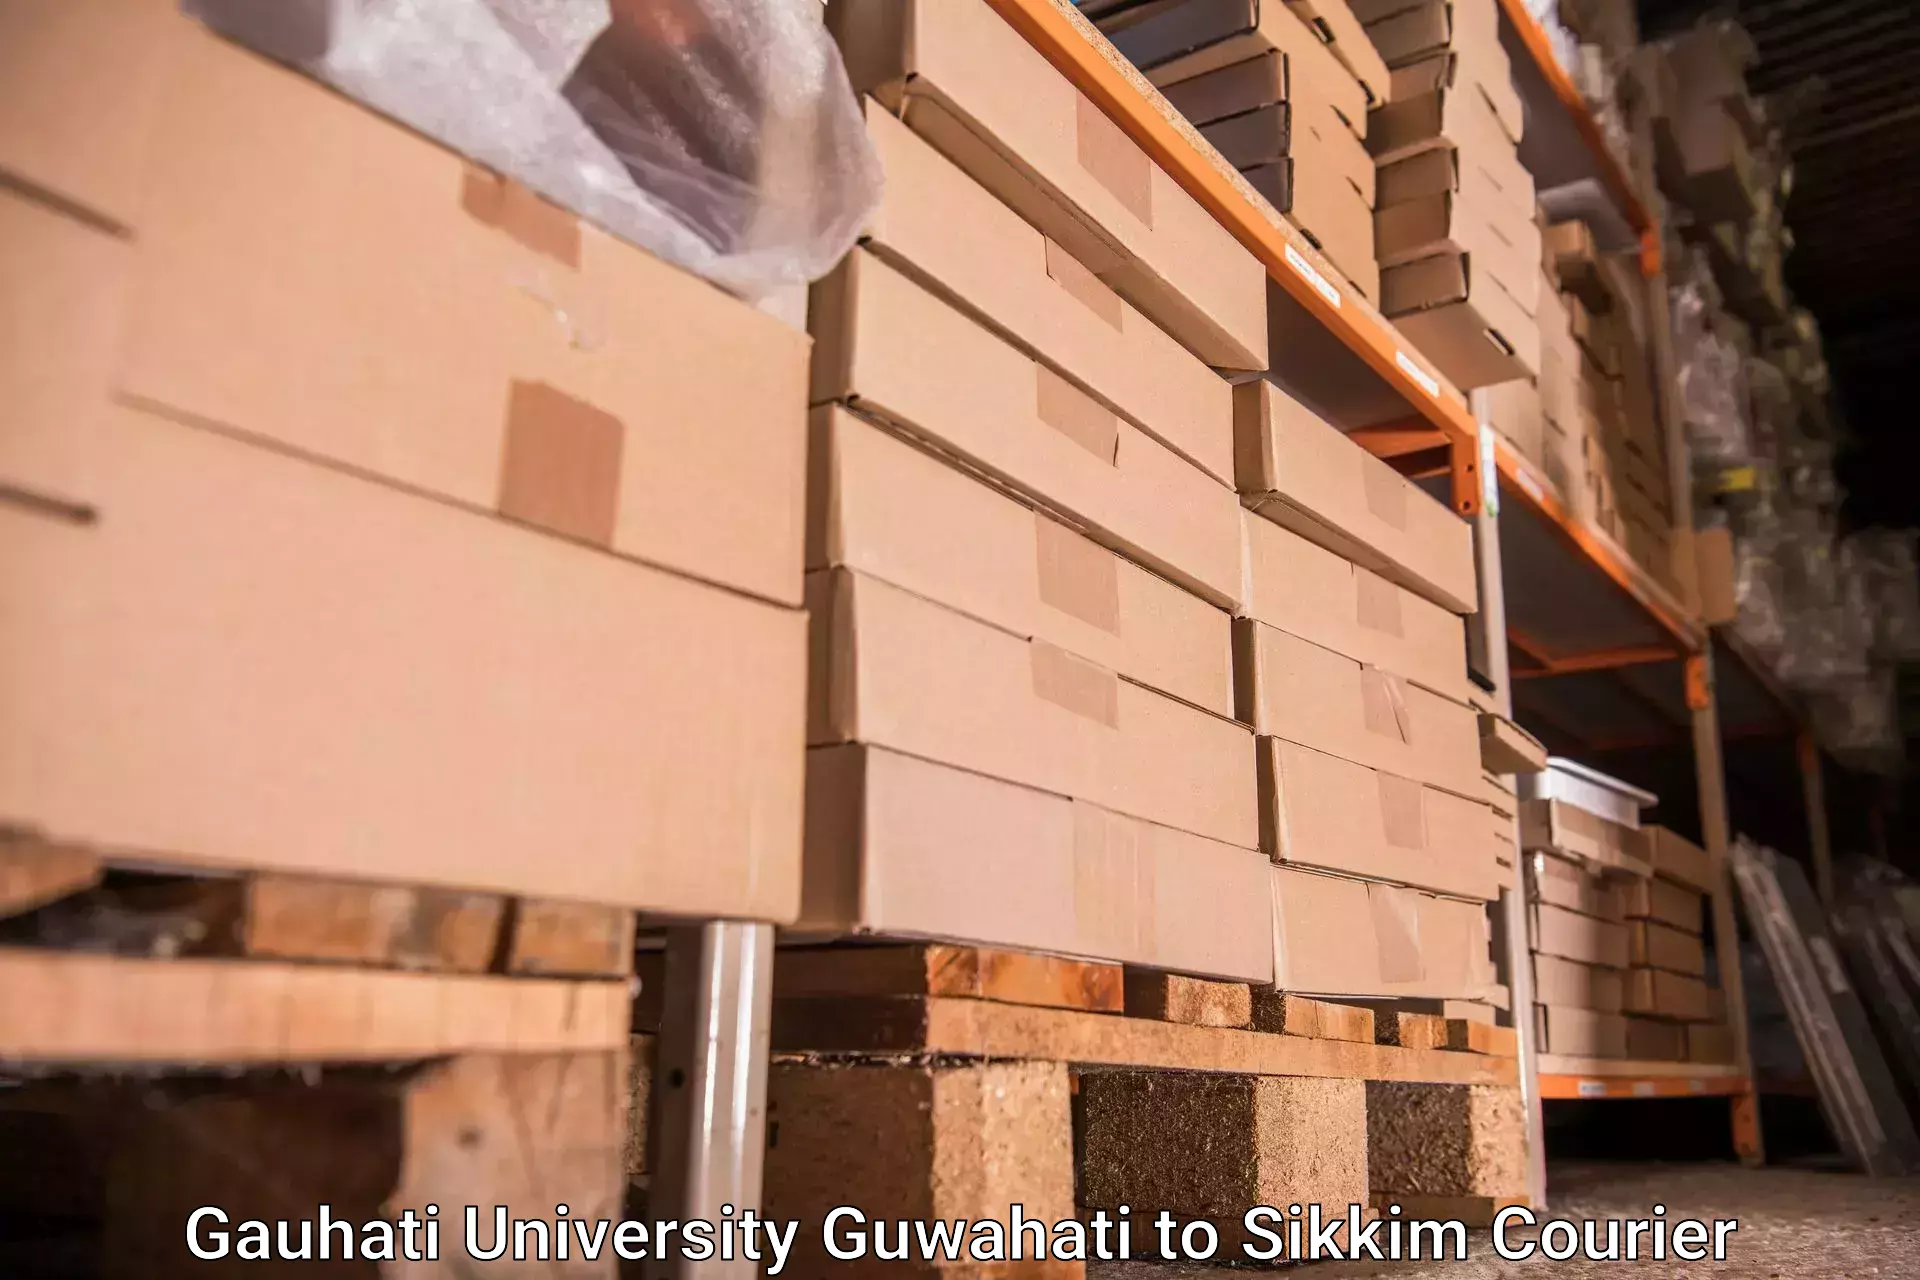 Baggage shipping service Gauhati University Guwahati to West Sikkim